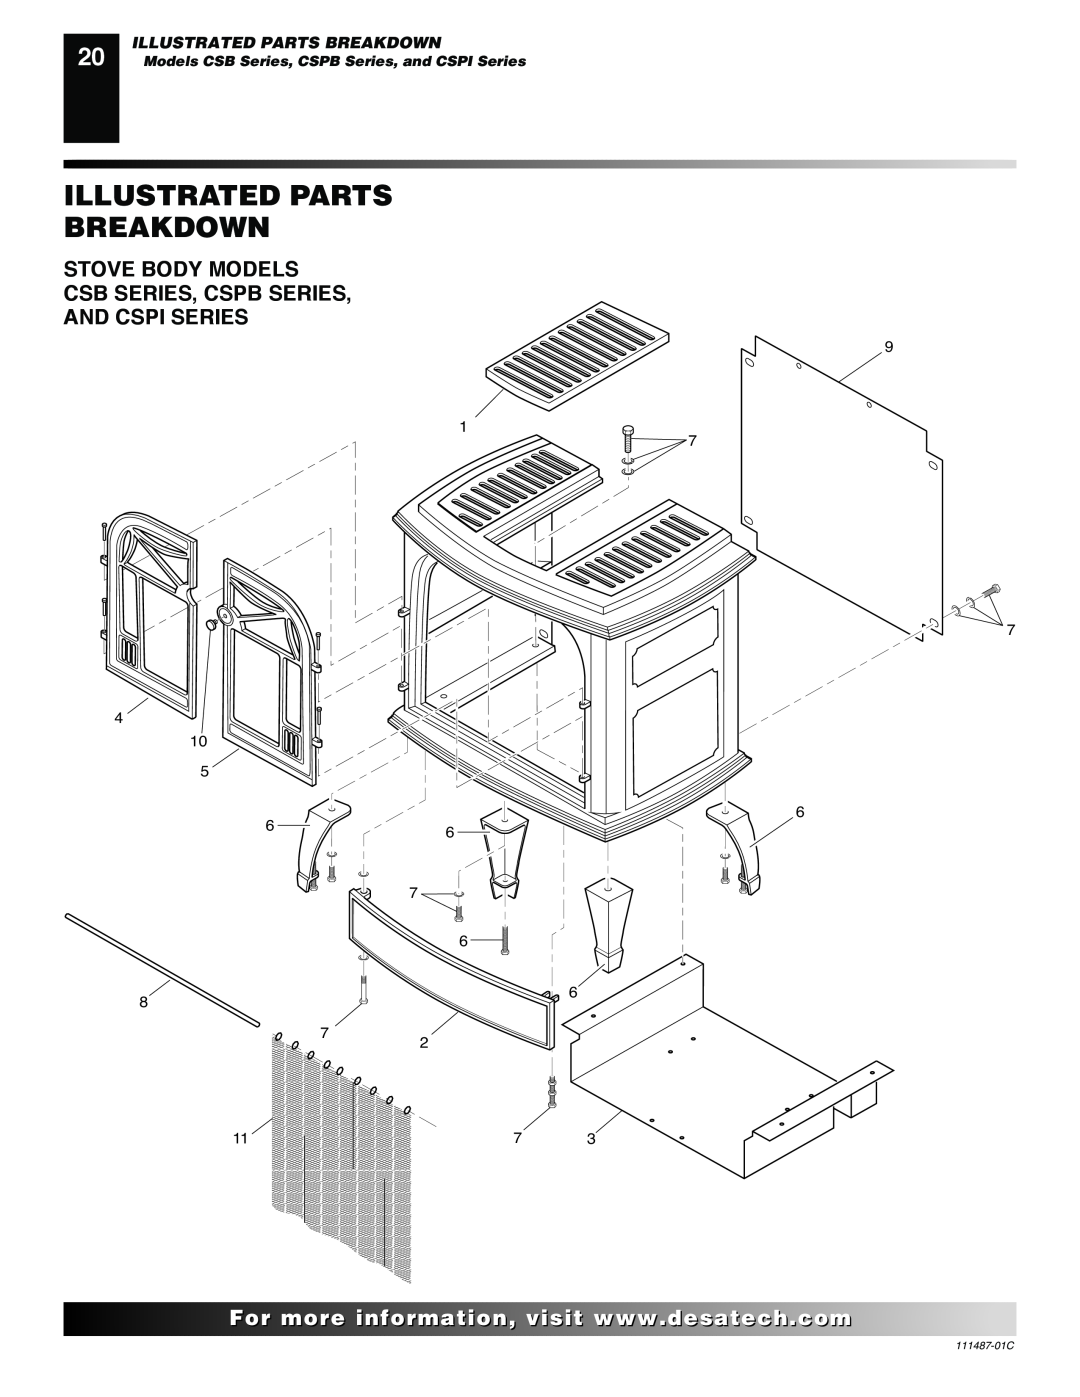 Desa CSPIPT, CSBNT Illustrated Parts Breakdown, For..com, Models CSB Series, CSPB Series, and CSPI Series, 111487-01C 